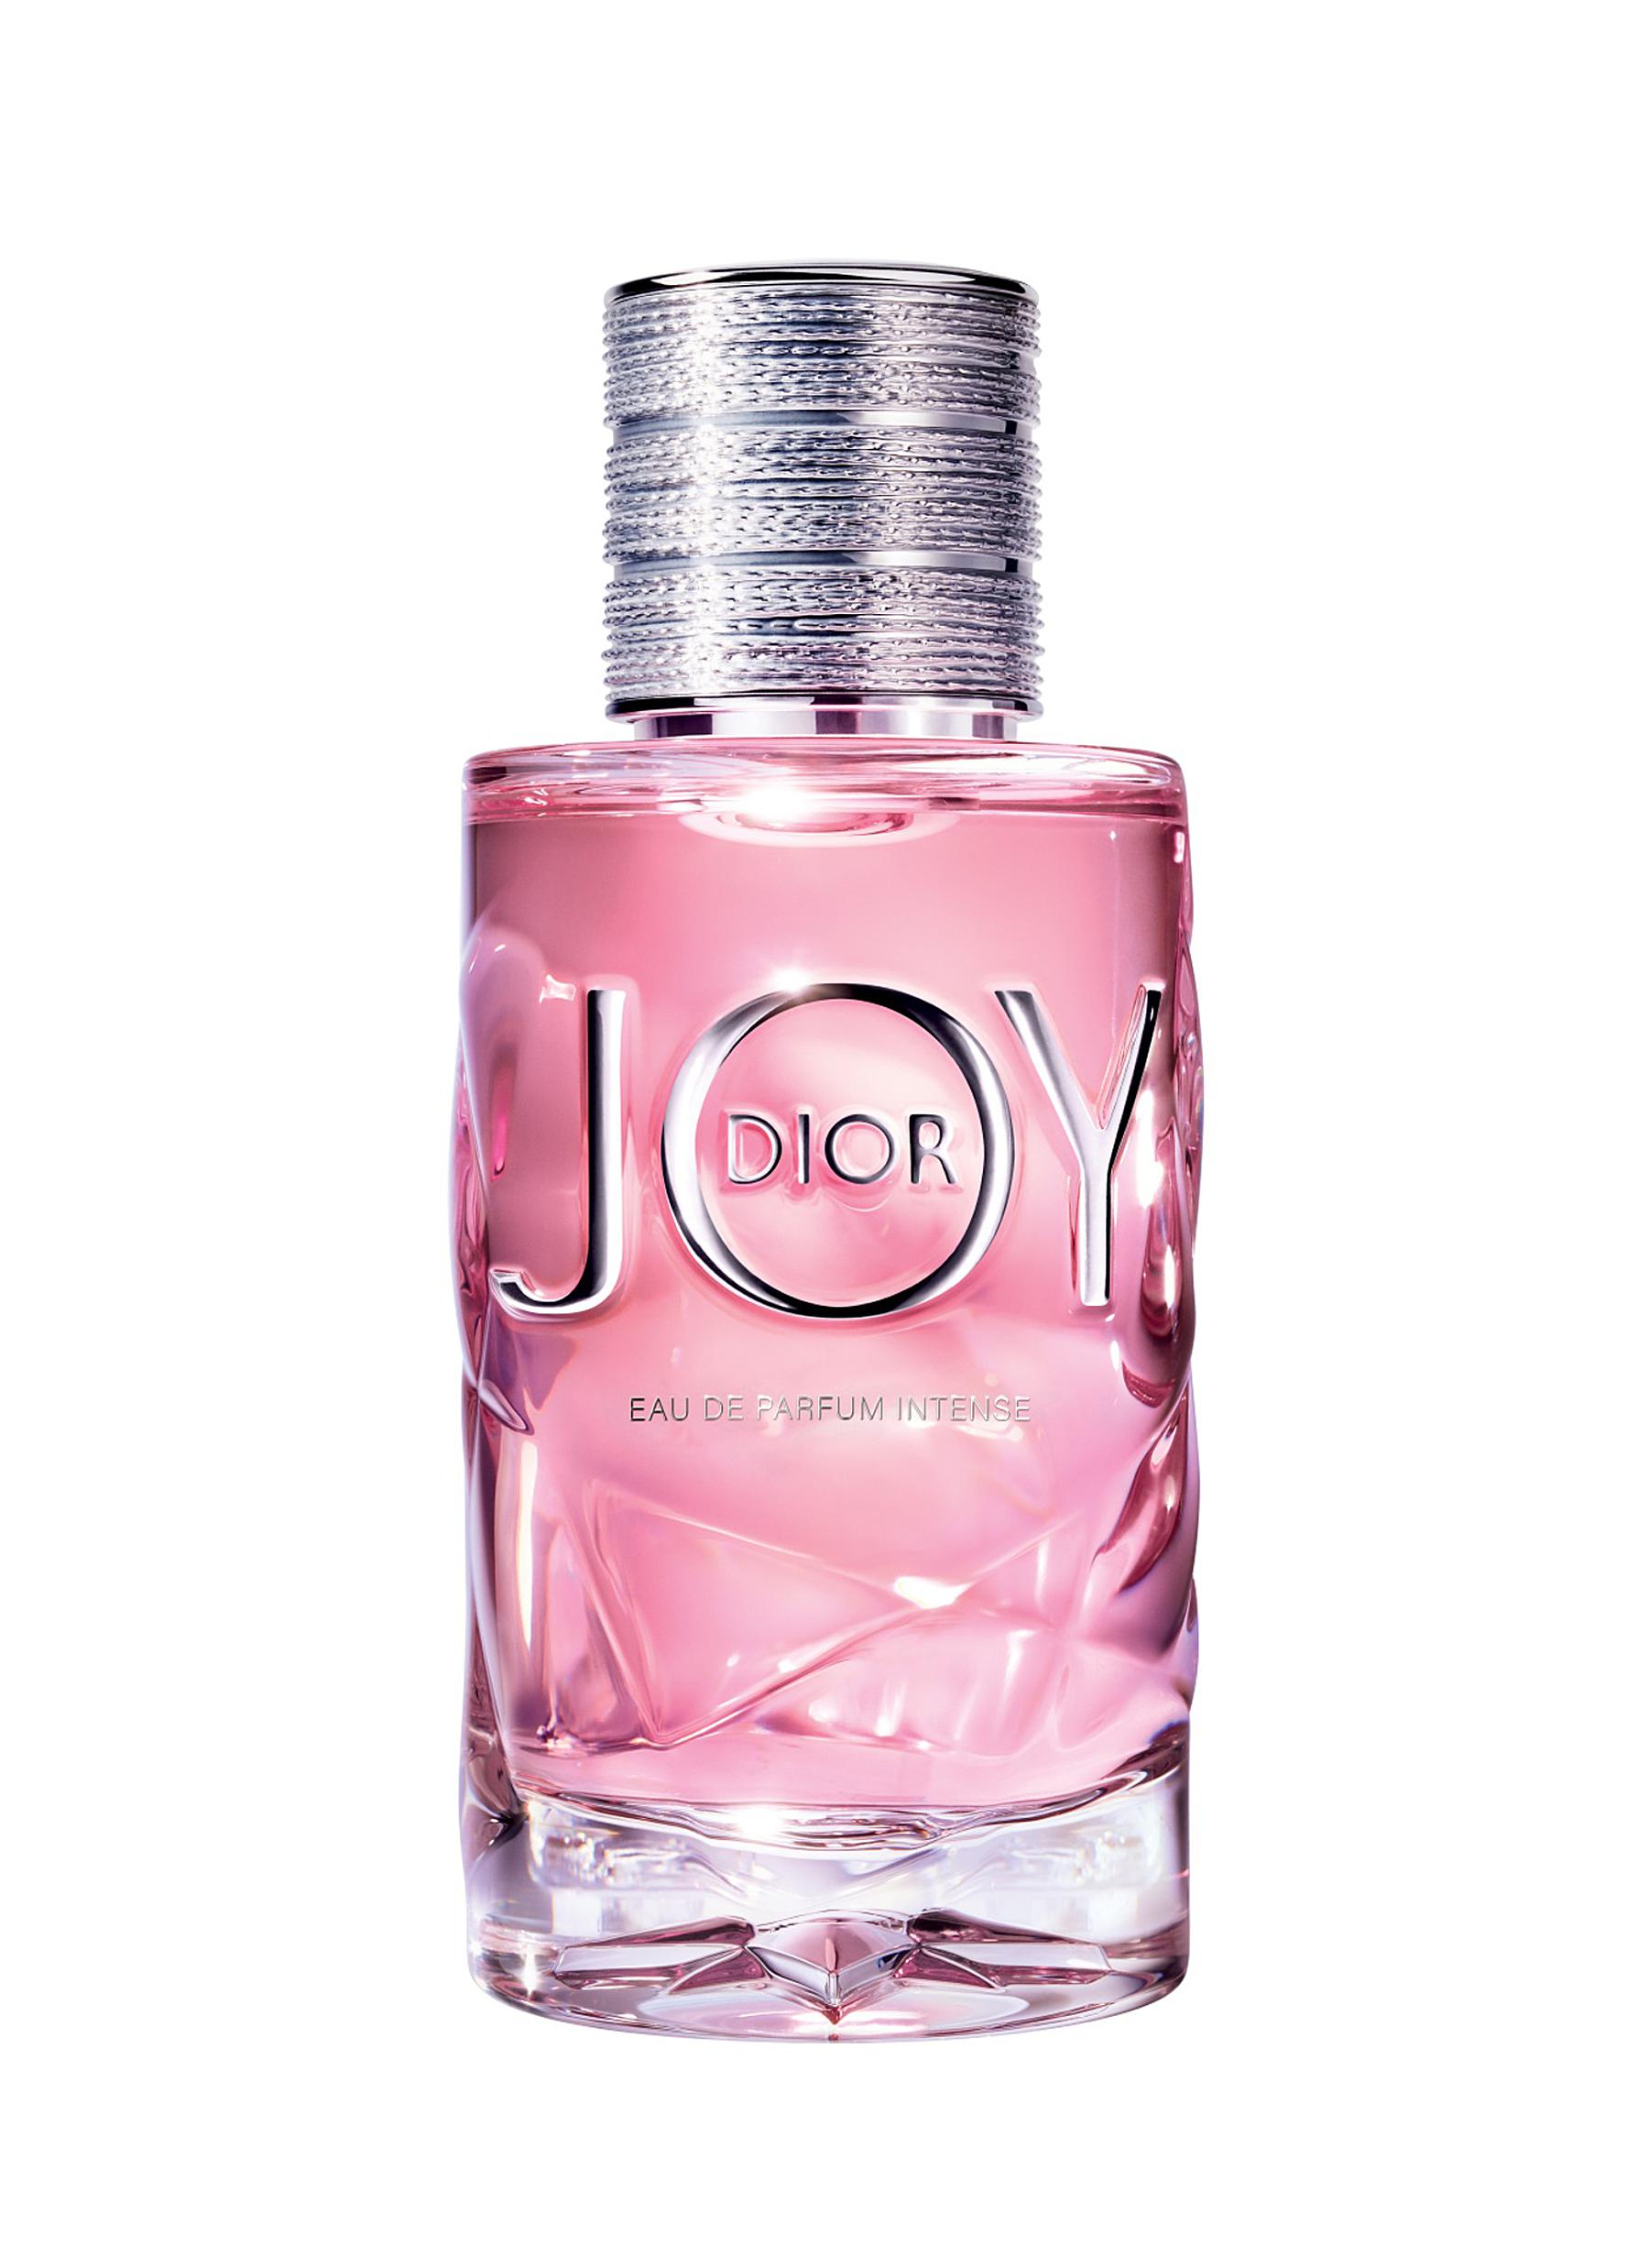 joy perfume 50ml